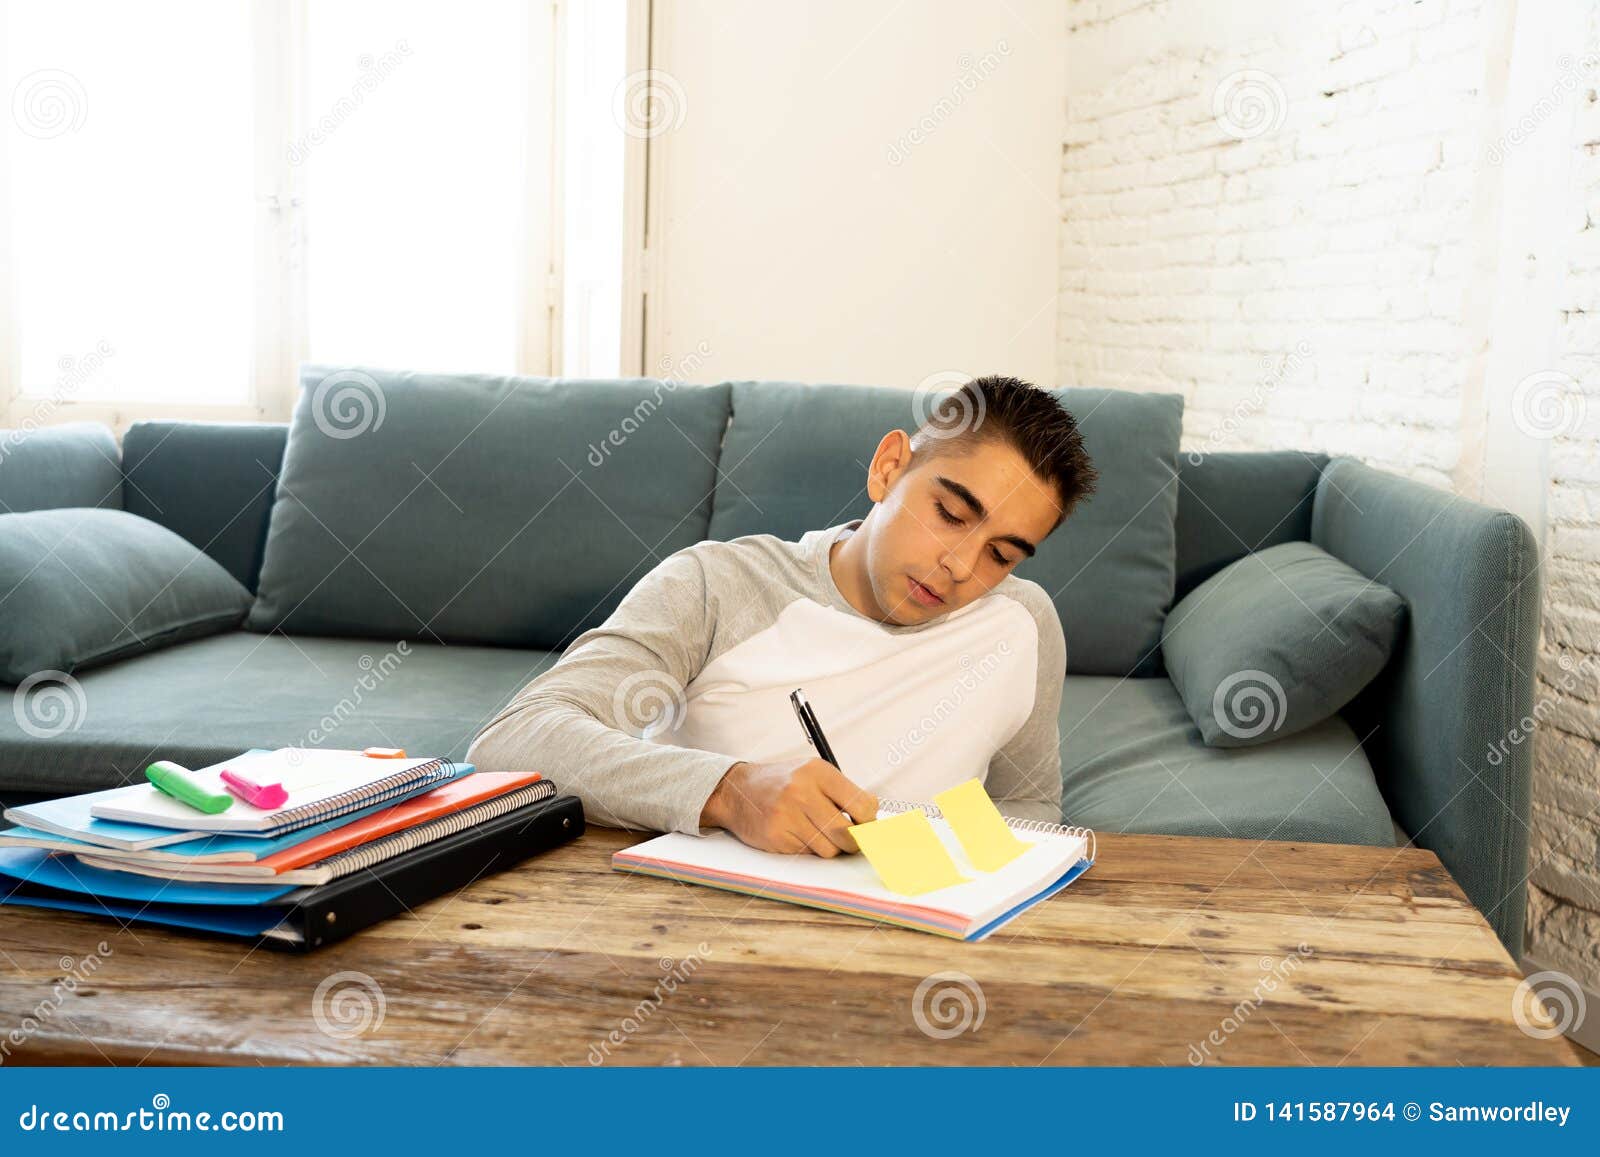 man doing homework